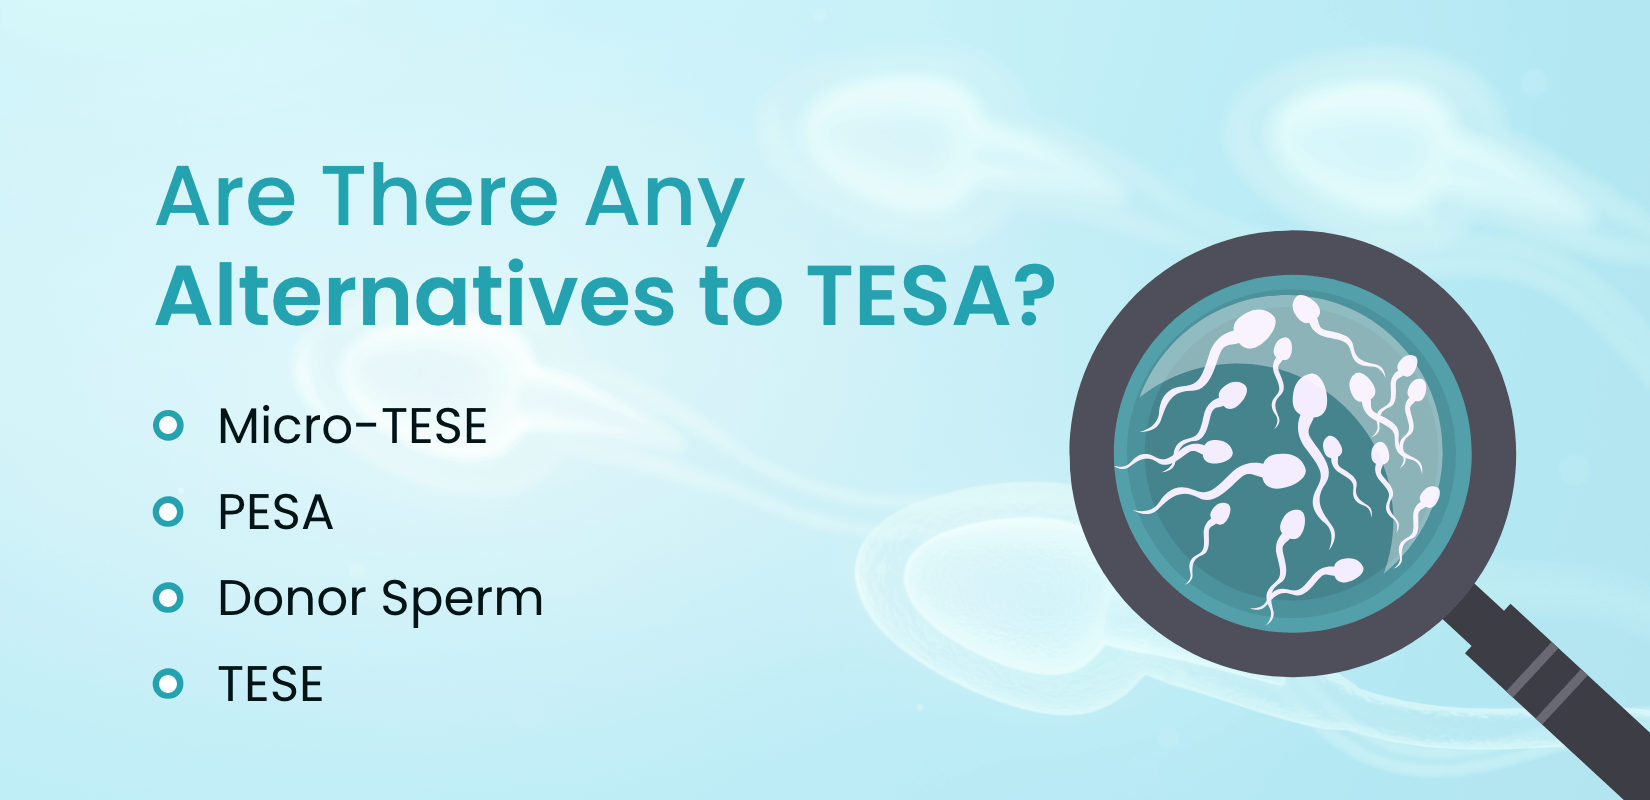 Are There Any Alternatives to TESA?
